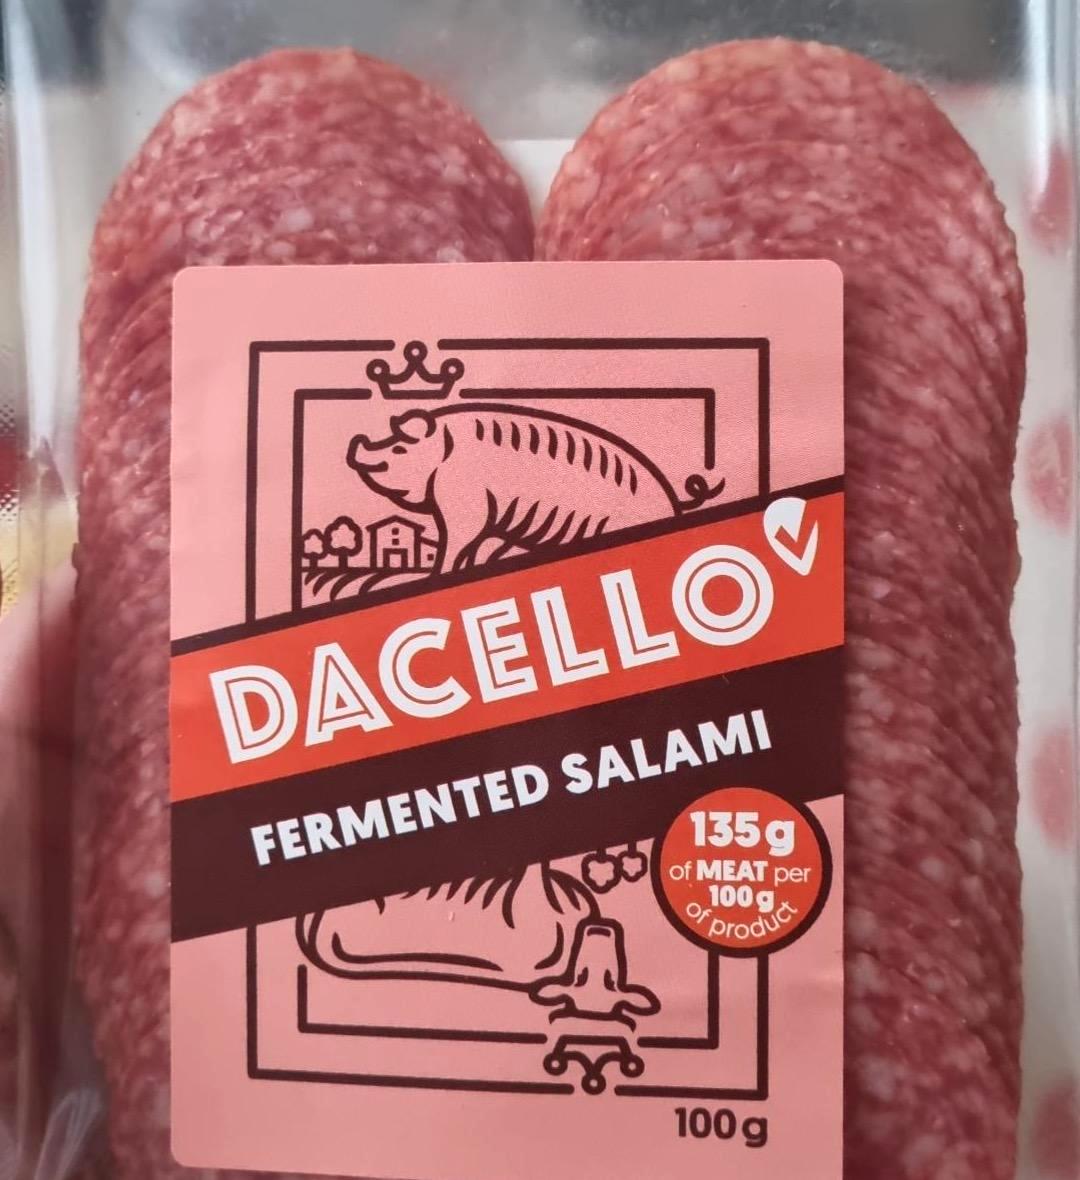 Képek - Fermented salami Dacello